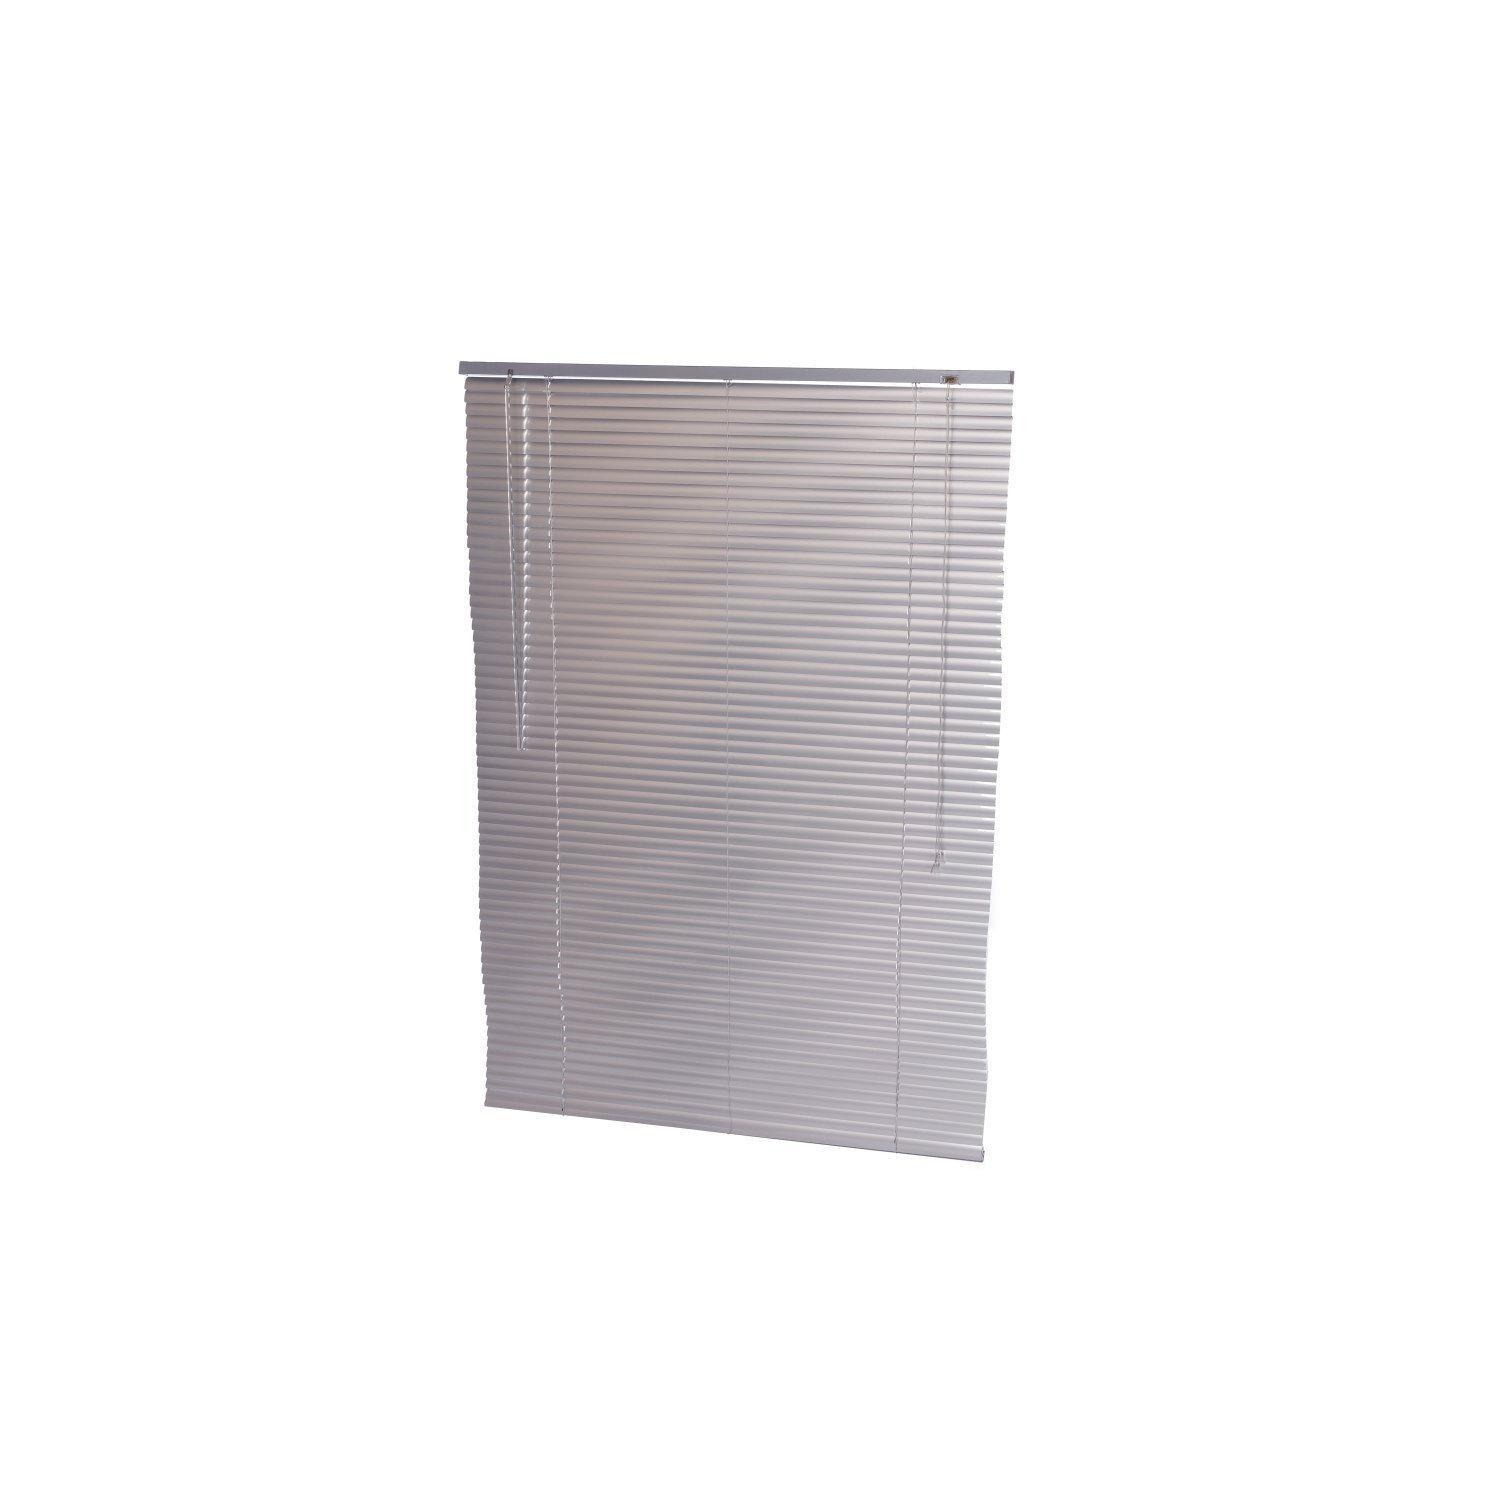 Aluminium Silver Venetian Window Blinds with Fixings - image 1